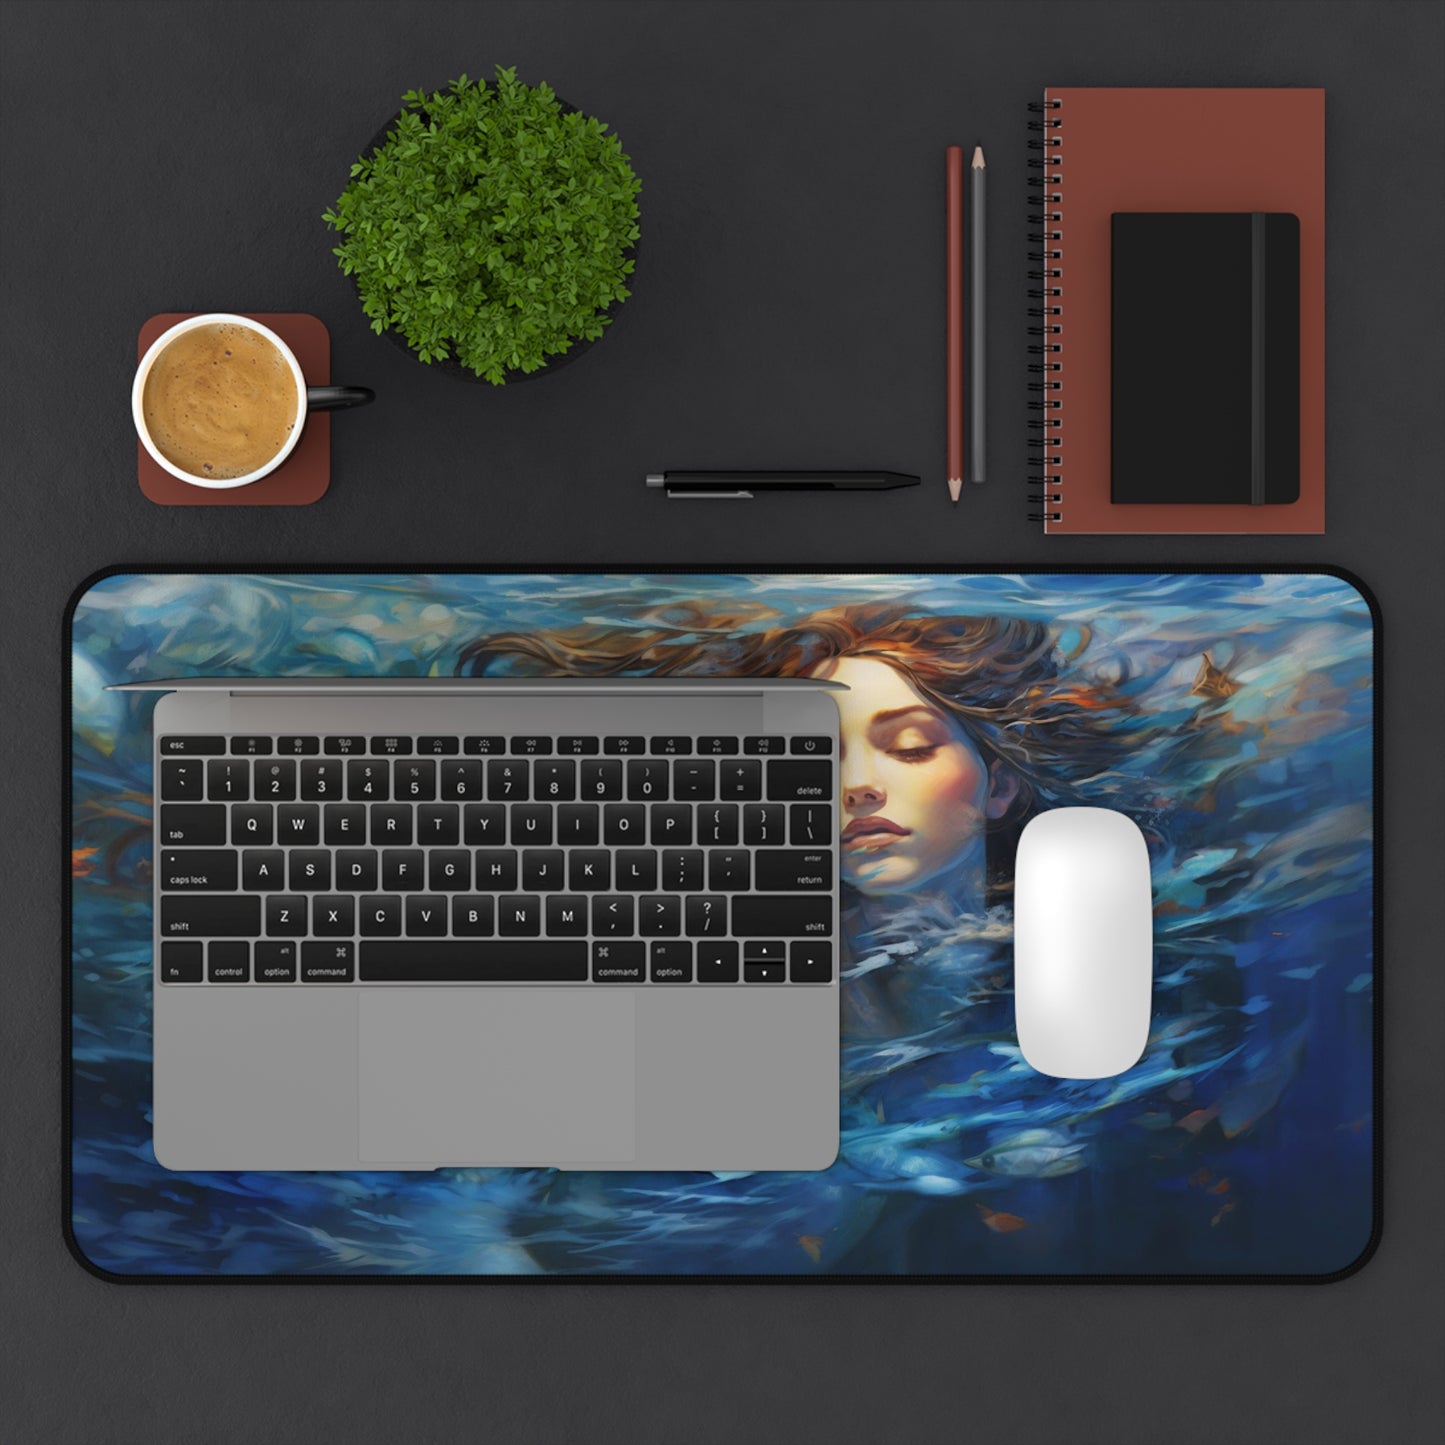 Mermaid Desk Mat, Water Lady Desk Pad, Underwater Beauty Painting Mouse Pad, D&D Fantasy Dice Mat, Large Keyboard Mat, Desk Accessory